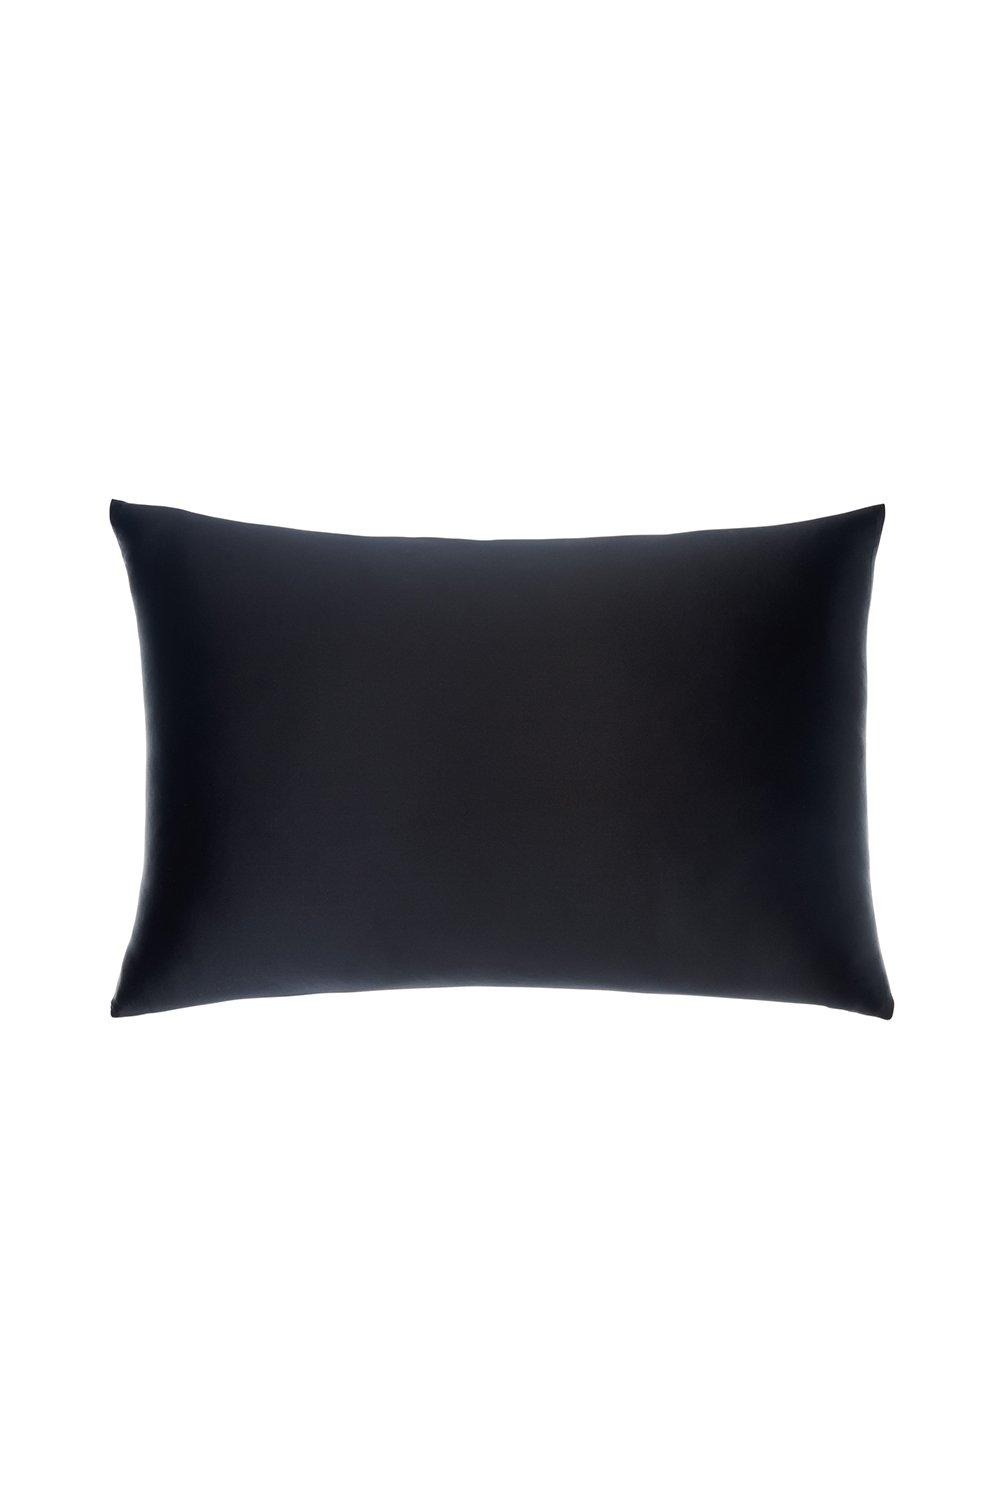 'Silky' Standard Pillowcase